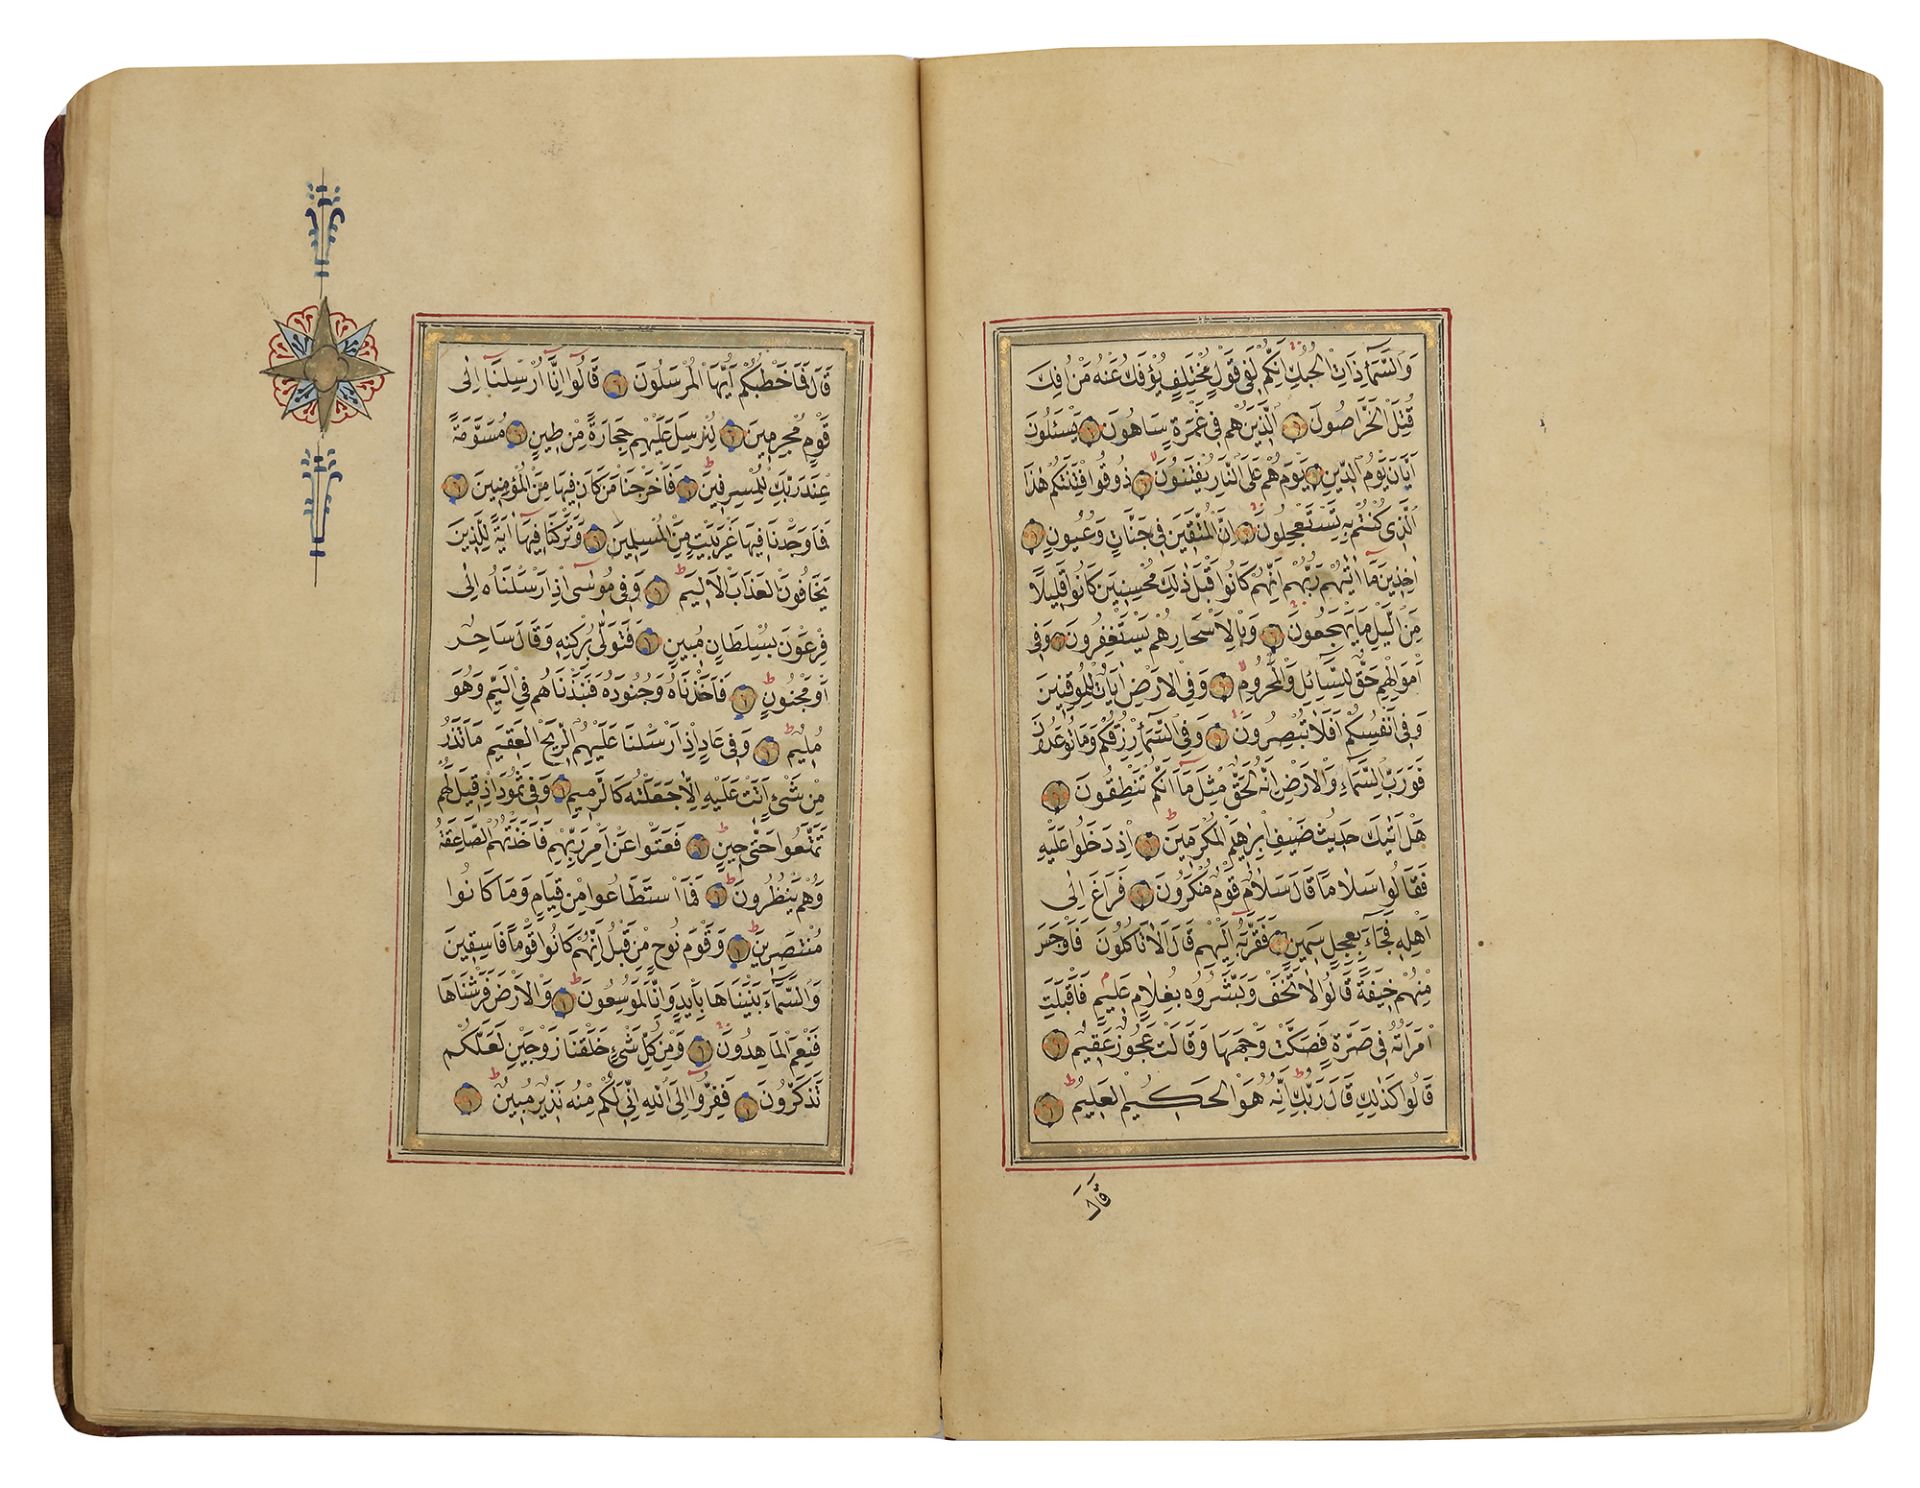 A FINE OTTOMAN QURAN, TURKEY, WRITTEN BY OMAR AL-FAWRABI STUDENT OF OMAR RUSHDI, DATED 1273 AH/1856 - Image 4 of 6